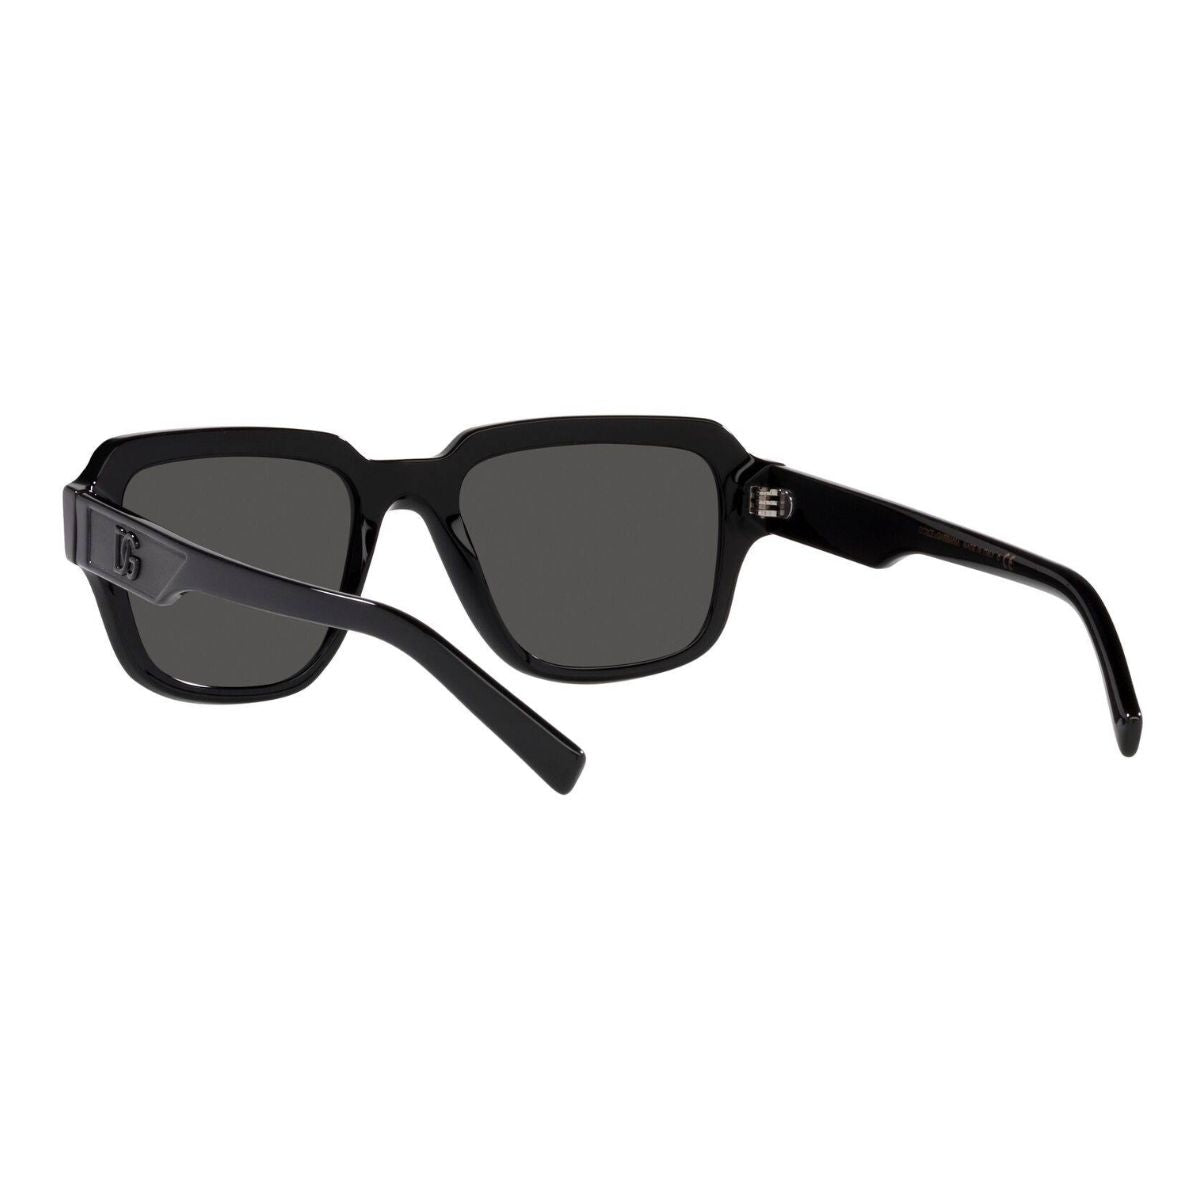 "Shop online now for Dolce & Gabbana DG4402 501/87 sunglasses for men at Optorium."